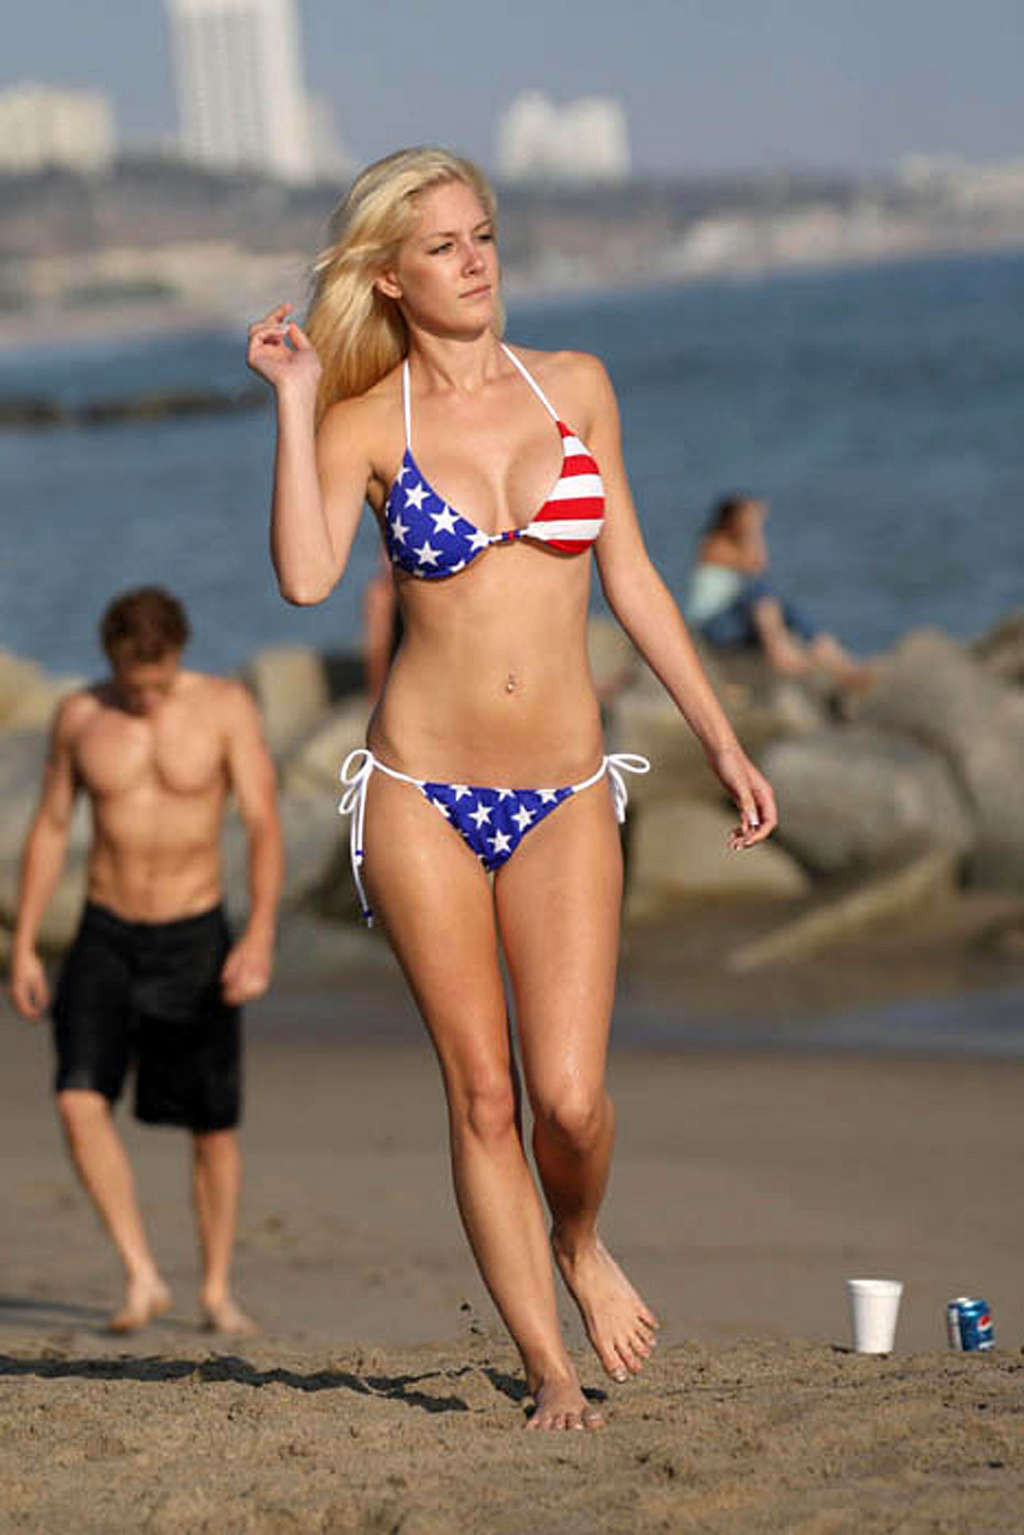 Heidi montag mostrando cuerpo de super modelo en bikini y bonitas tetas
 #75373398